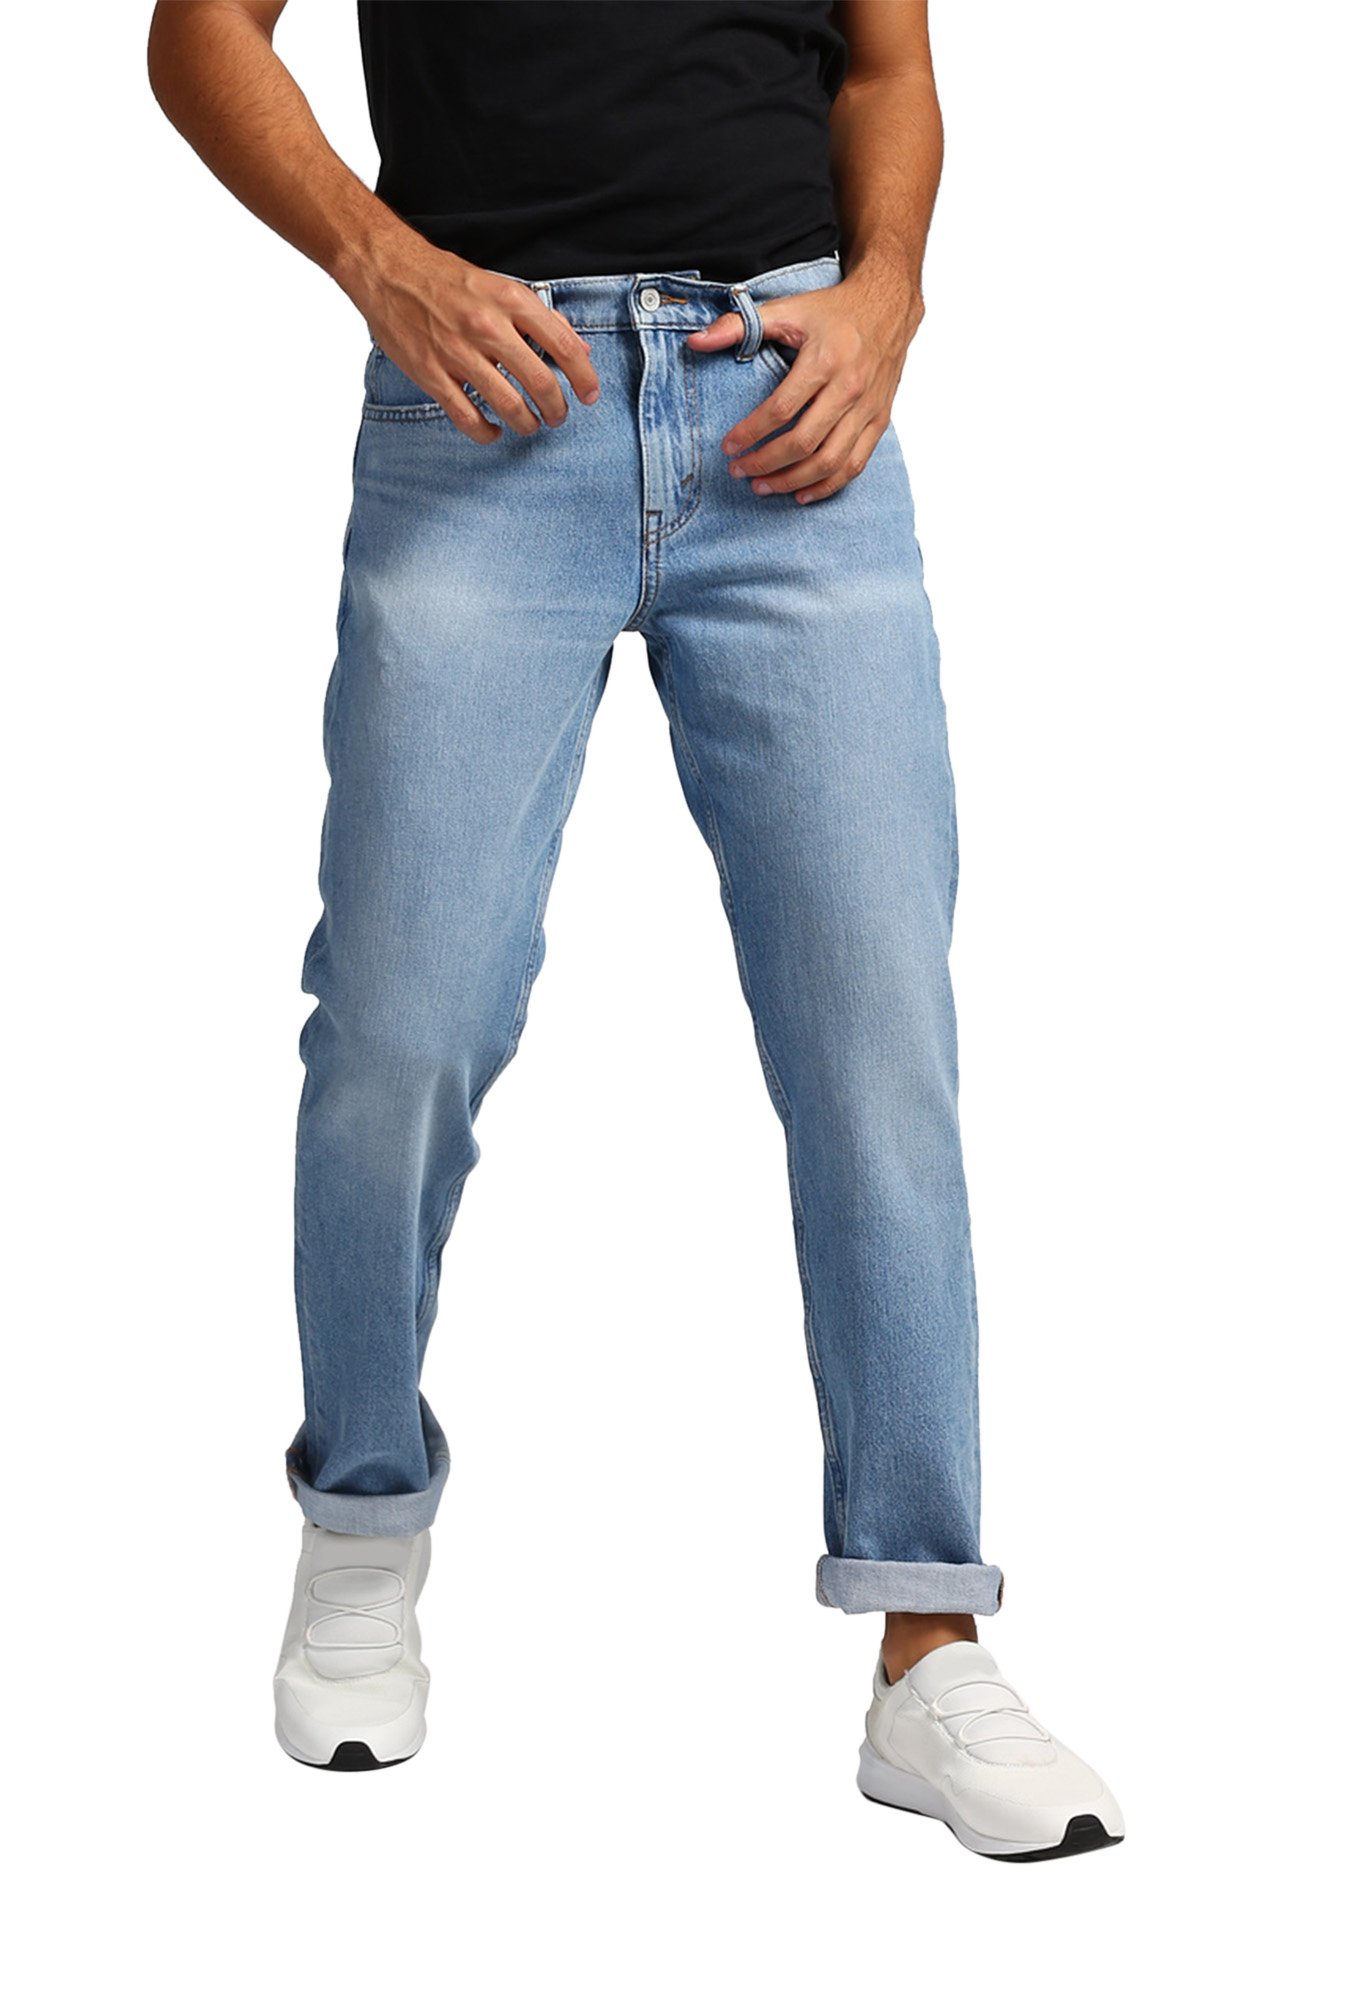 Buy Levi's 511 Blue Slim Fit Low Rise Jeans for Men Online @ Tata CLiQ